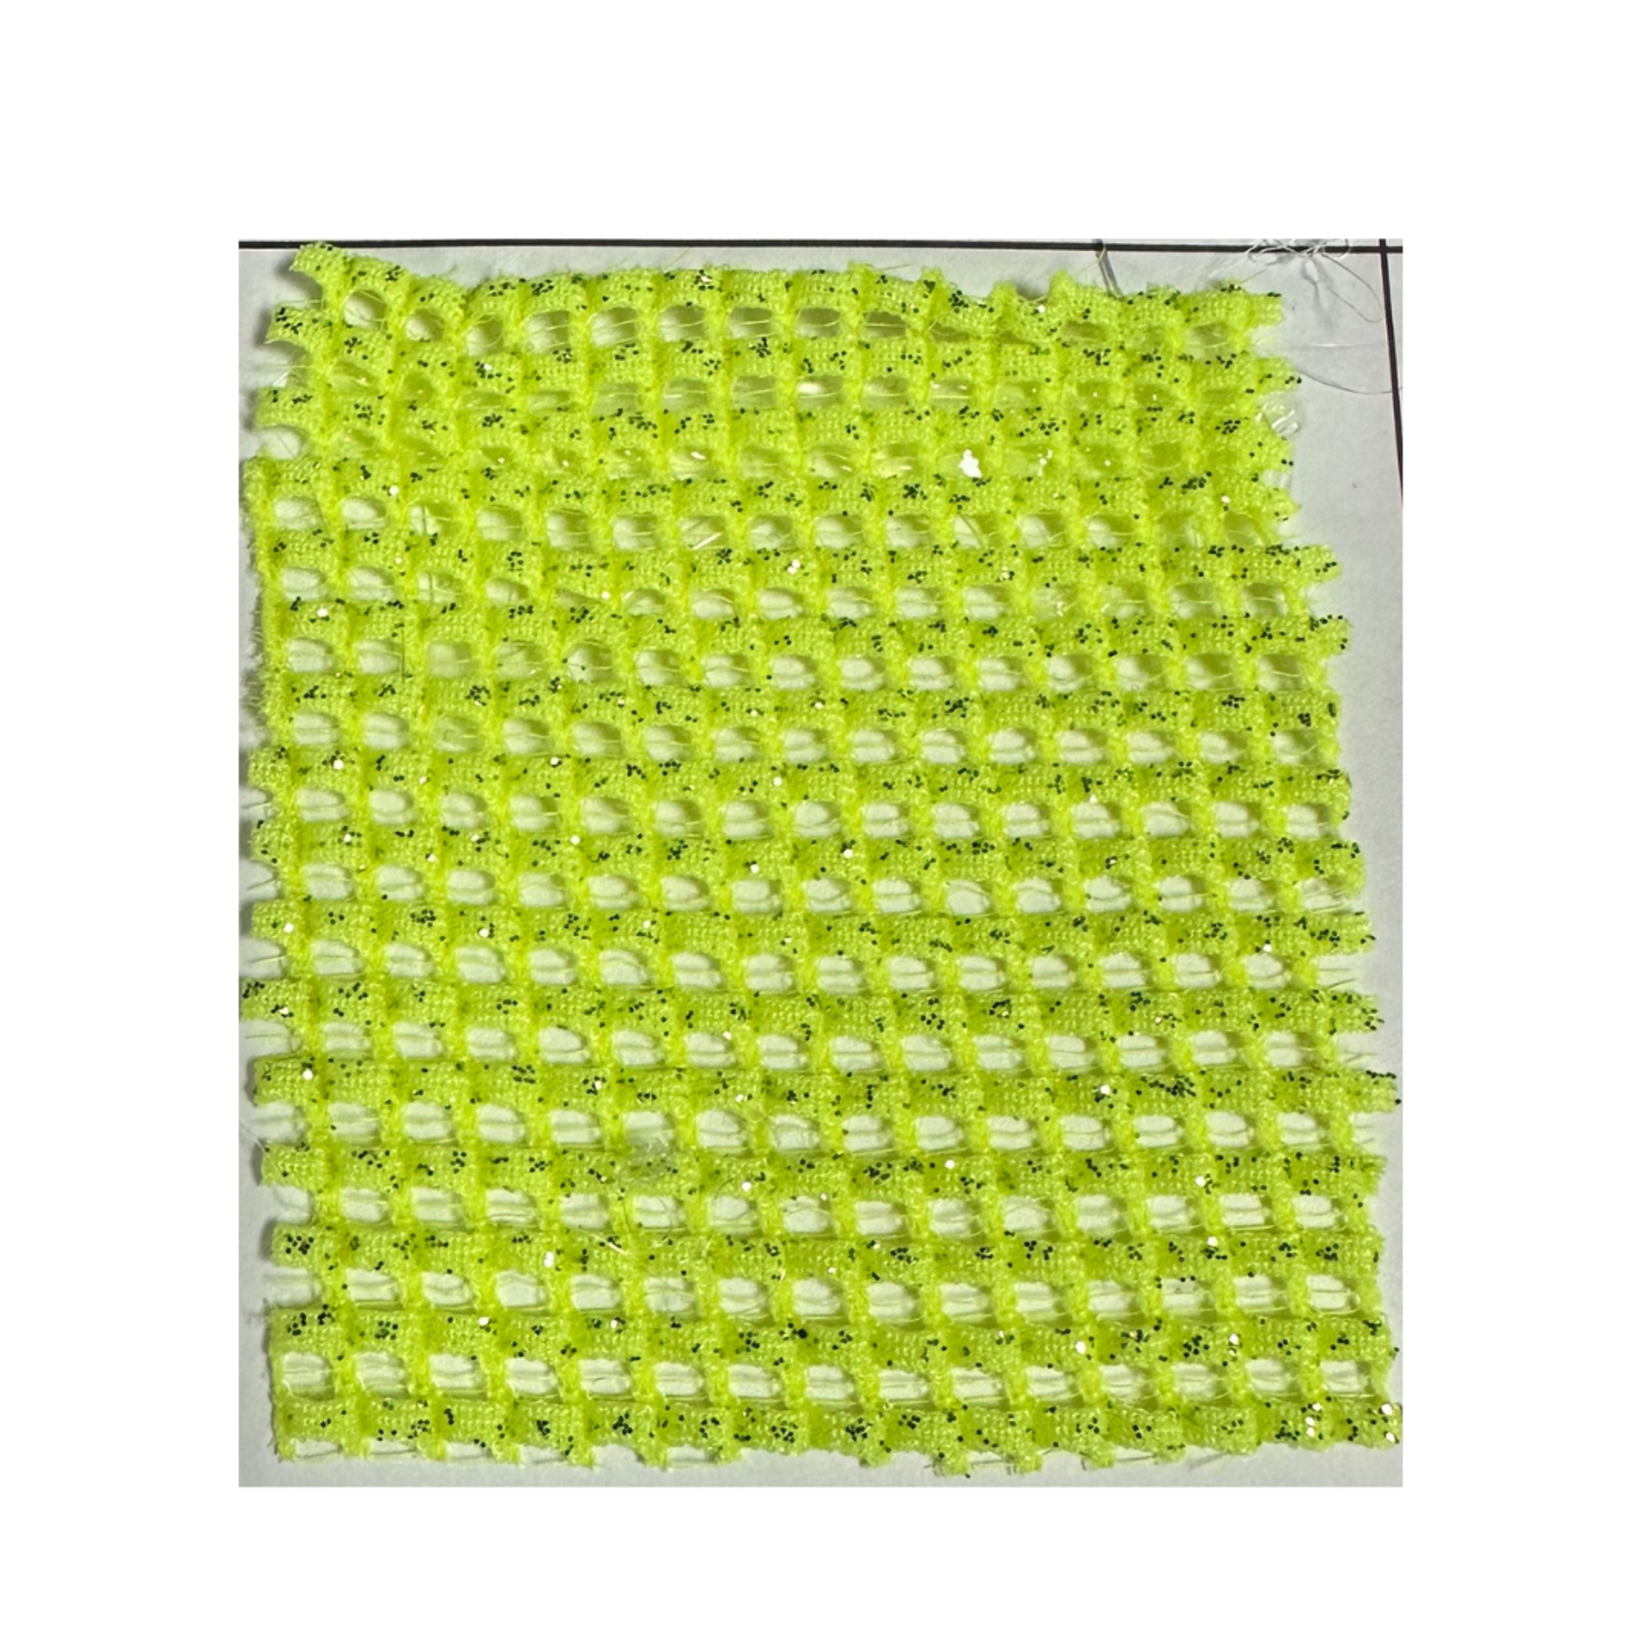 Nylon Kang Kang Glitter Fabric - Neon Yellow/Light Green